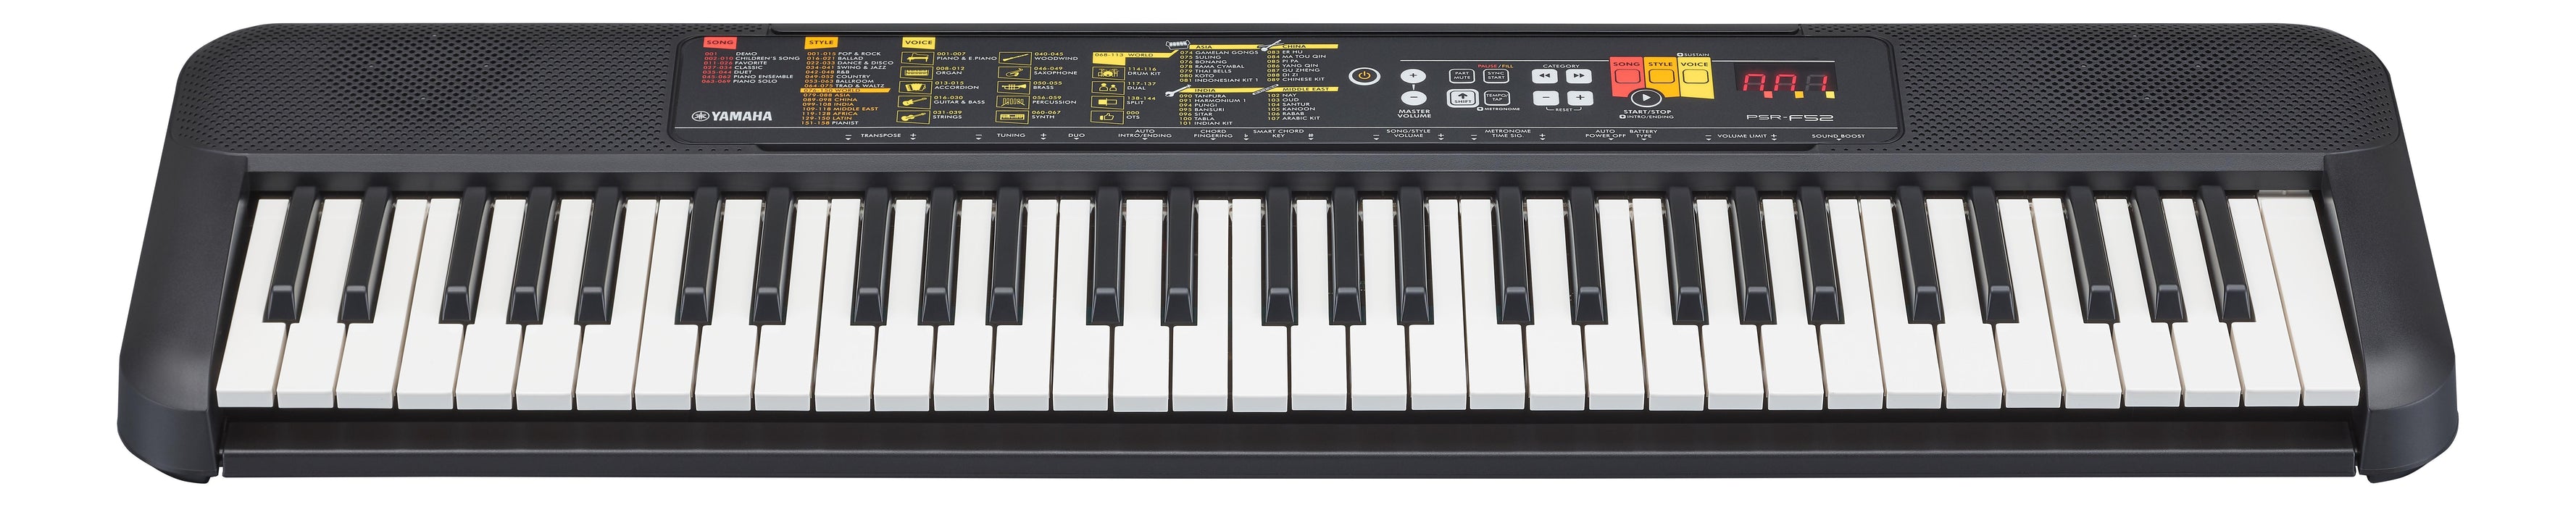 Yamaha PSR-F52 61-Keys Portable Keyboard - Music Bliss Malaysia